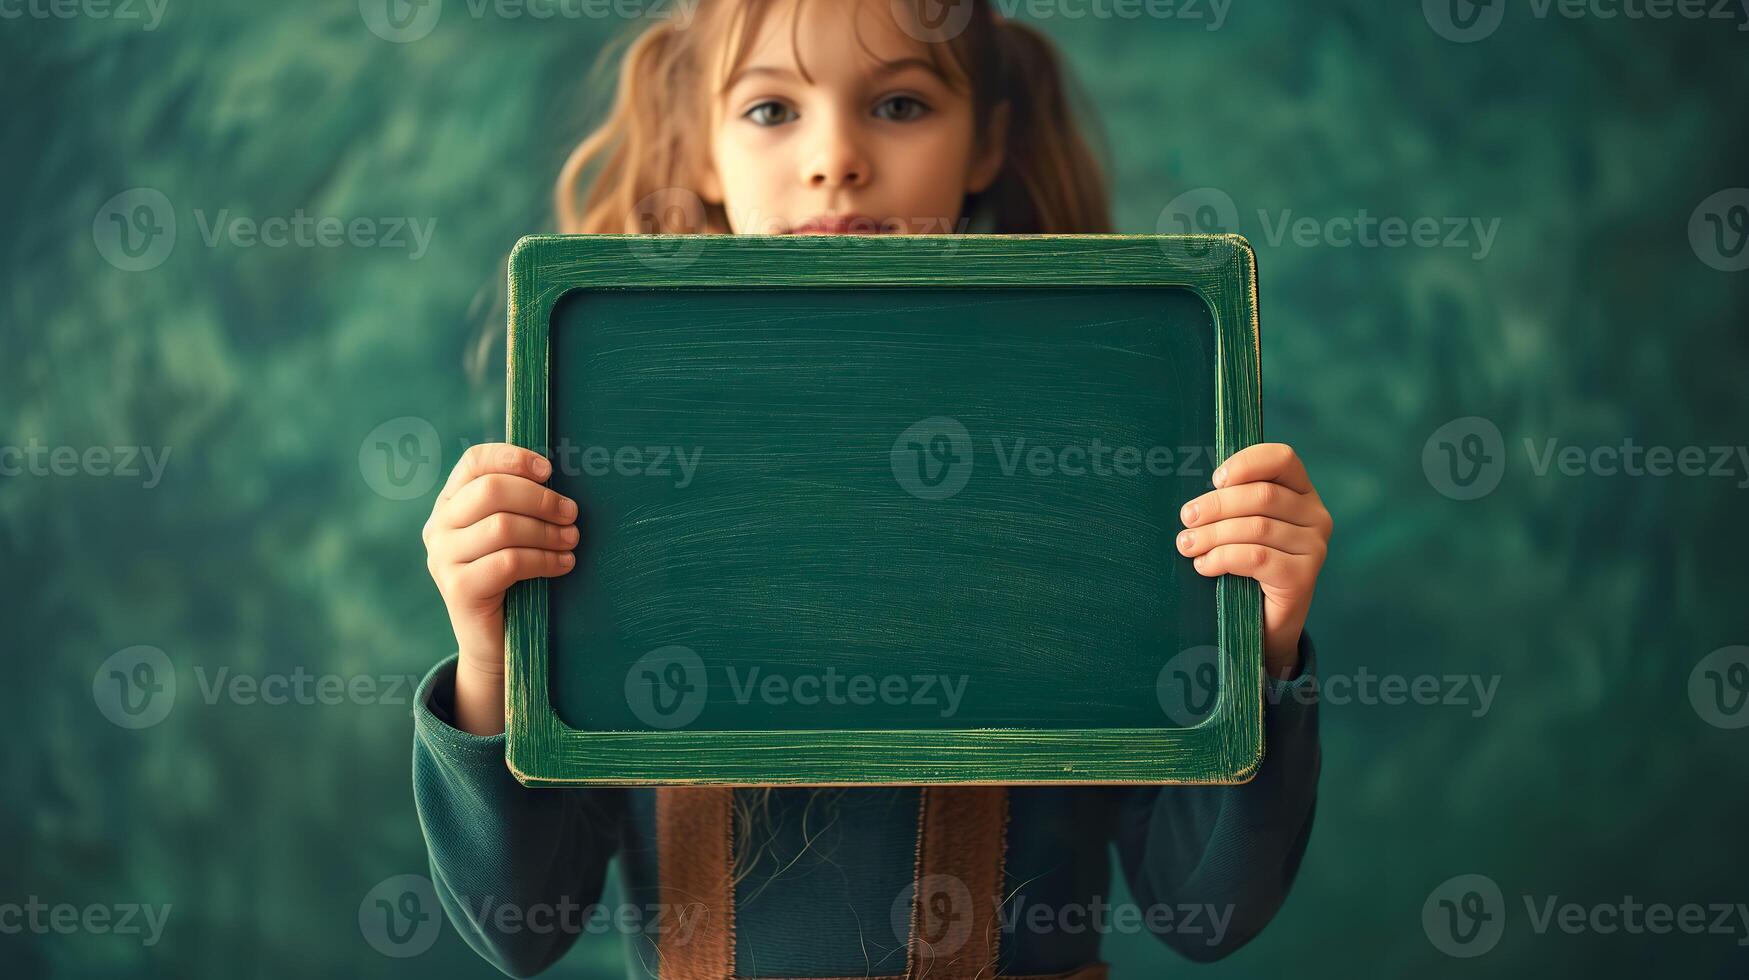 ai gegenereerd meisje Holding blanco groen schoolbord Aan groen achtergrond foto